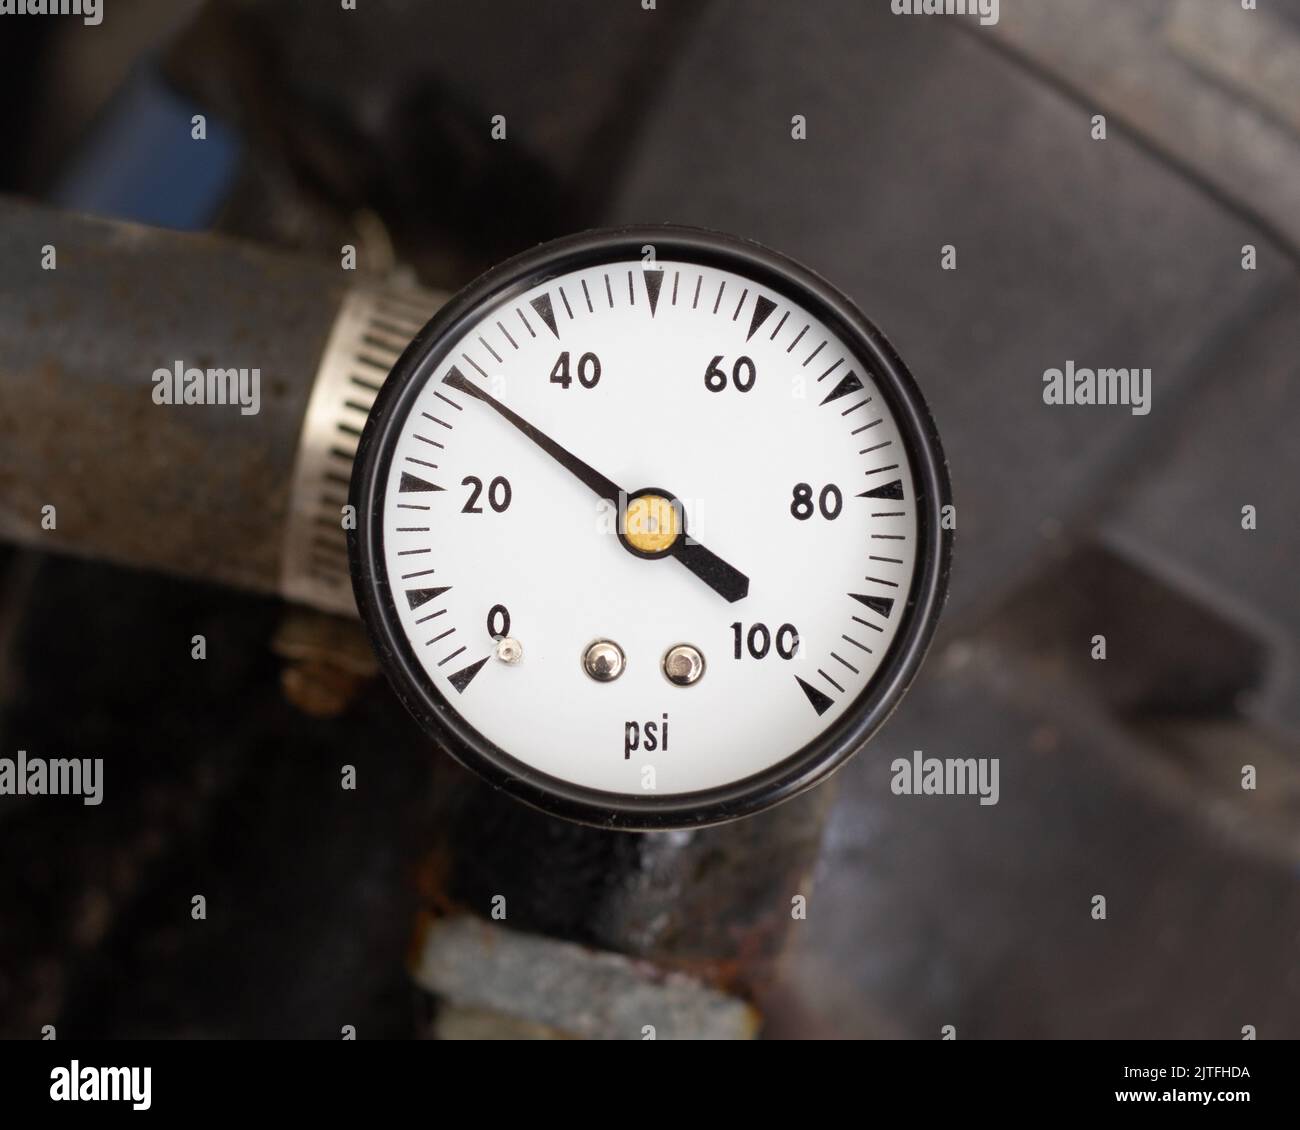 Dial type pressure gauge at 30 psi Stock Photo